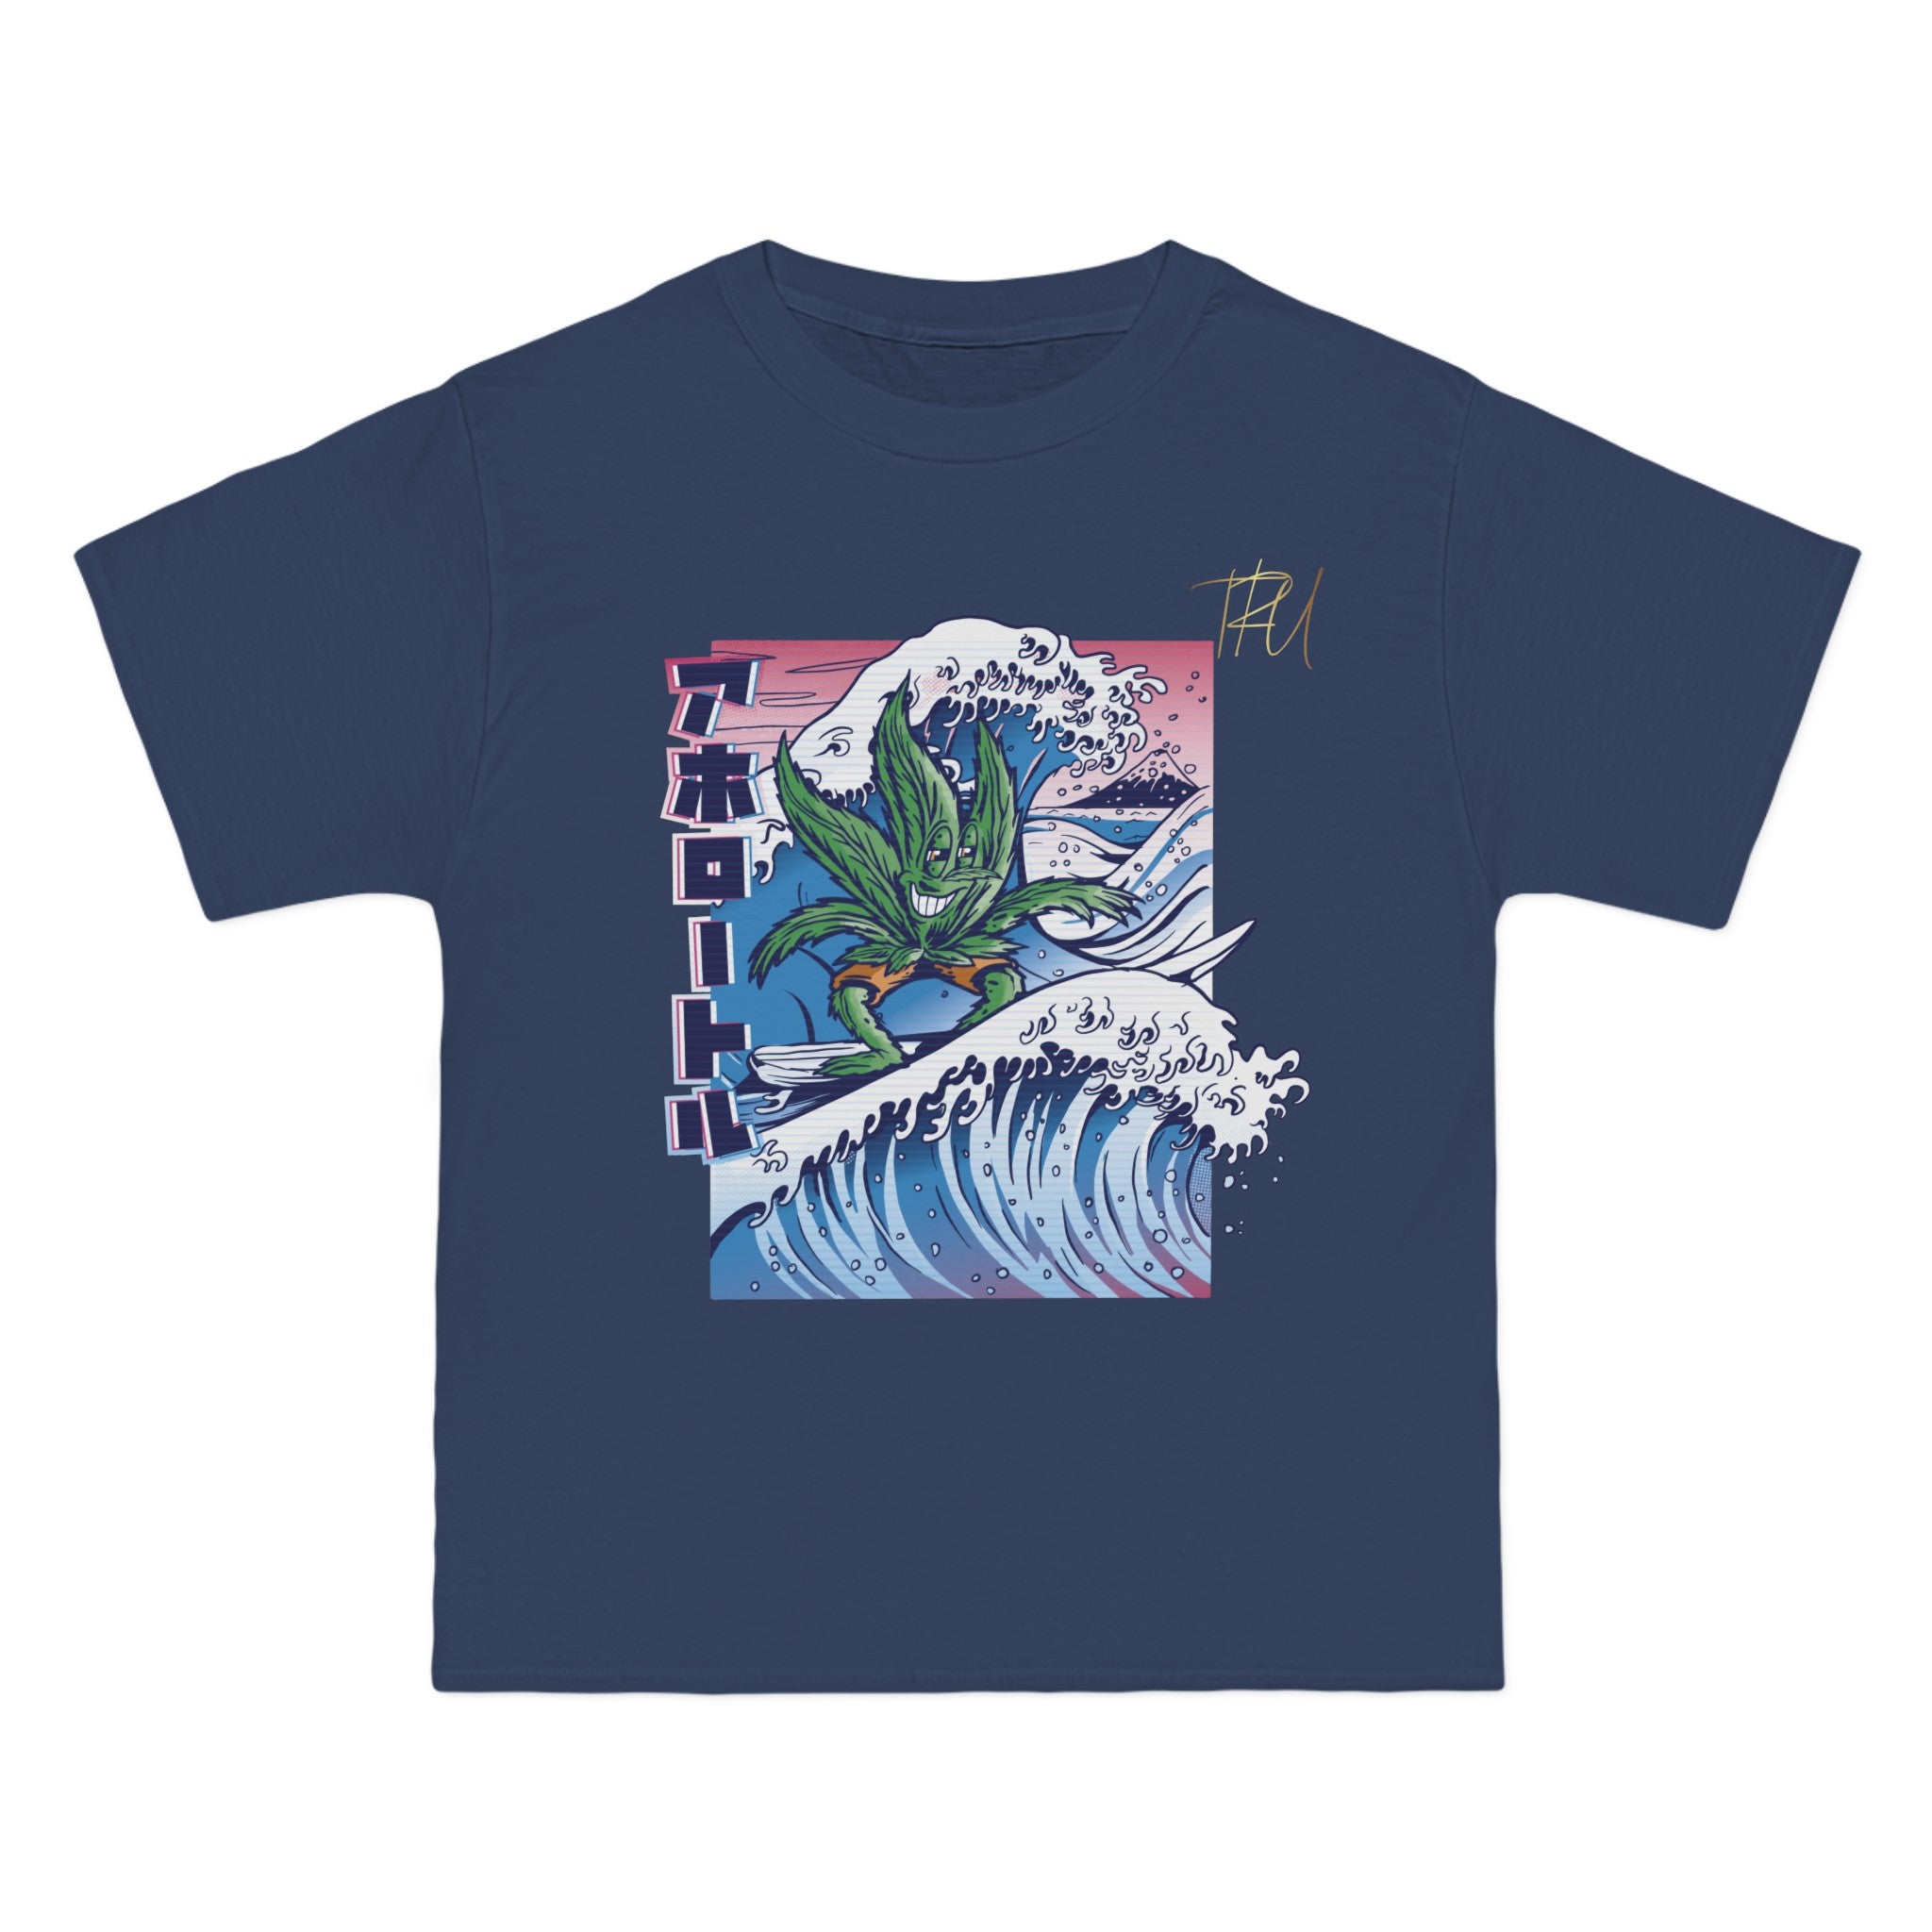 “Surfing Leaf Graphic Tee” - TreesRus2 Clothing